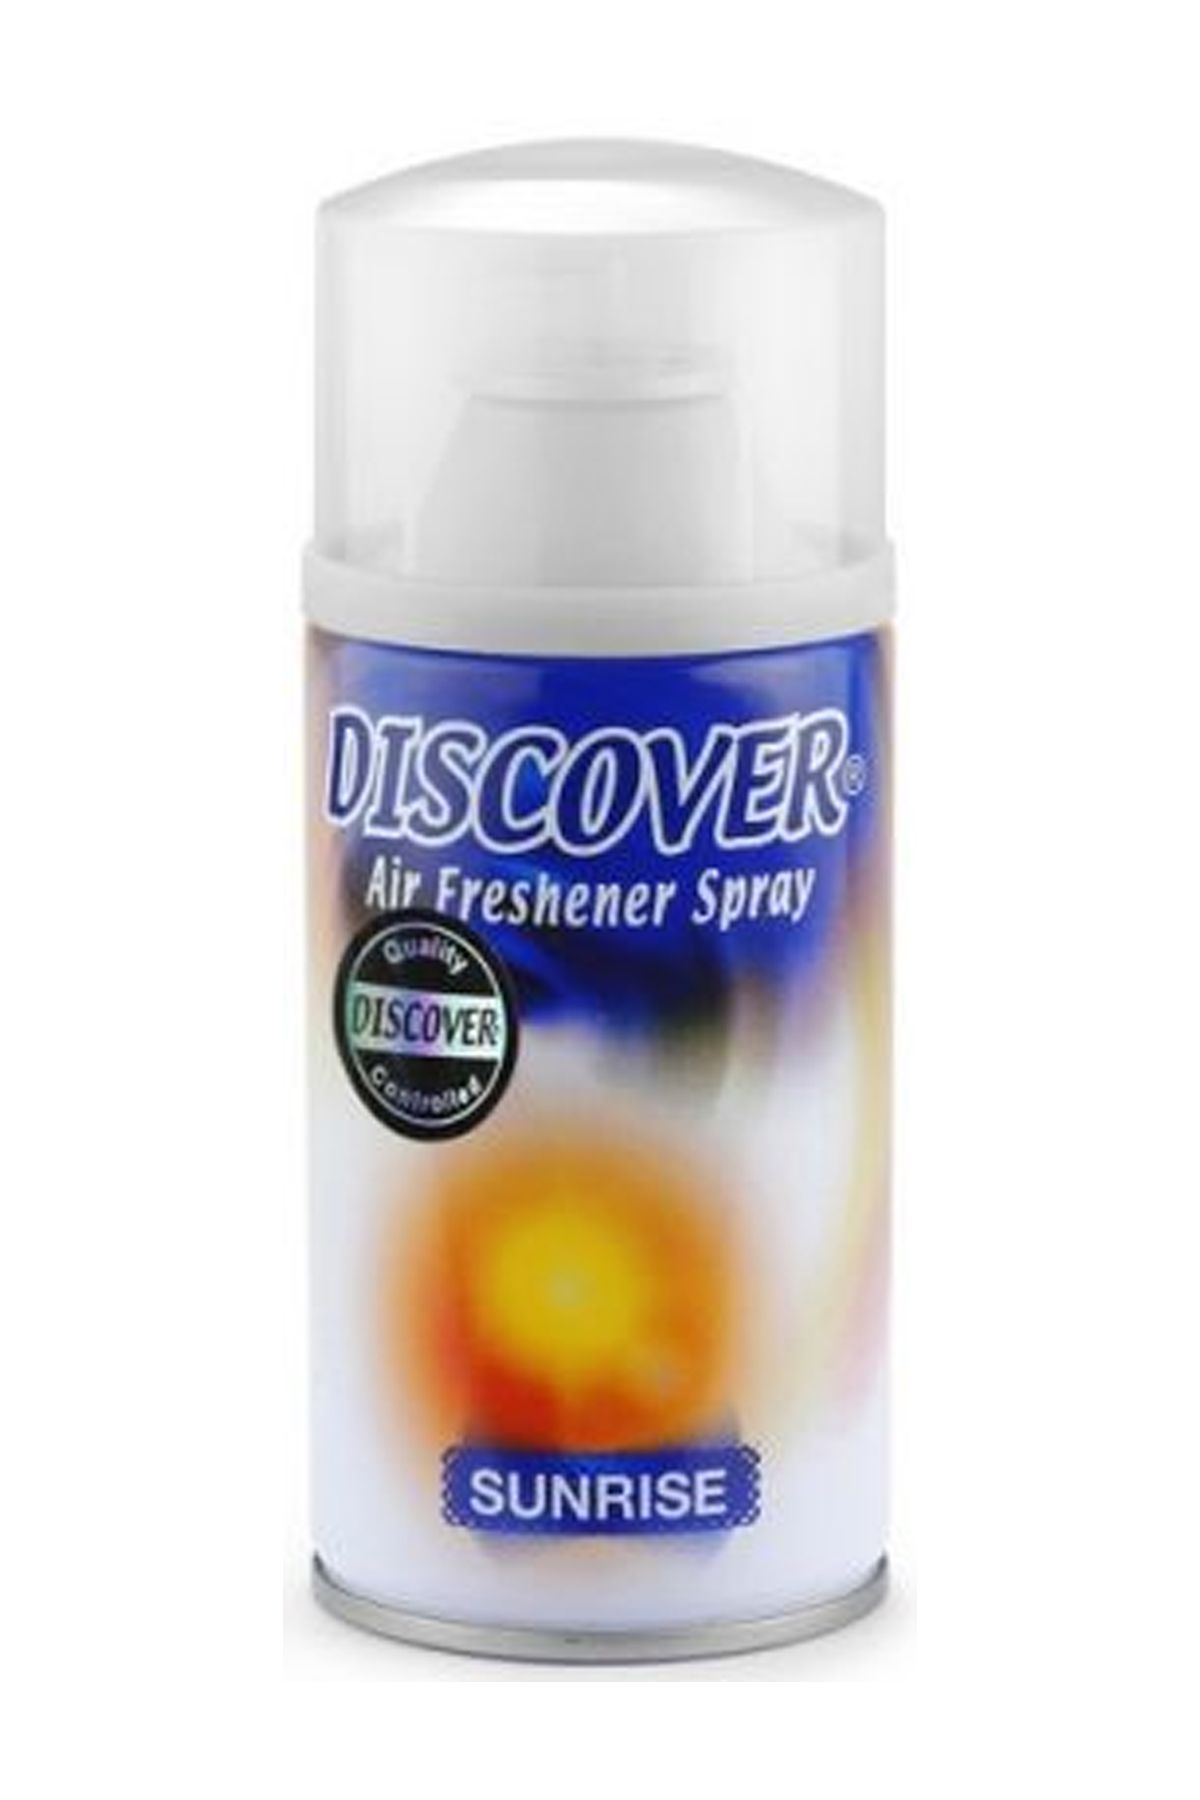 Discover освежитель воздуха. Discover Air Freshener Spray. Discover сменный баллон Sunrise, 320 мл. Спрей discover 320 мл. Discover освежитель.